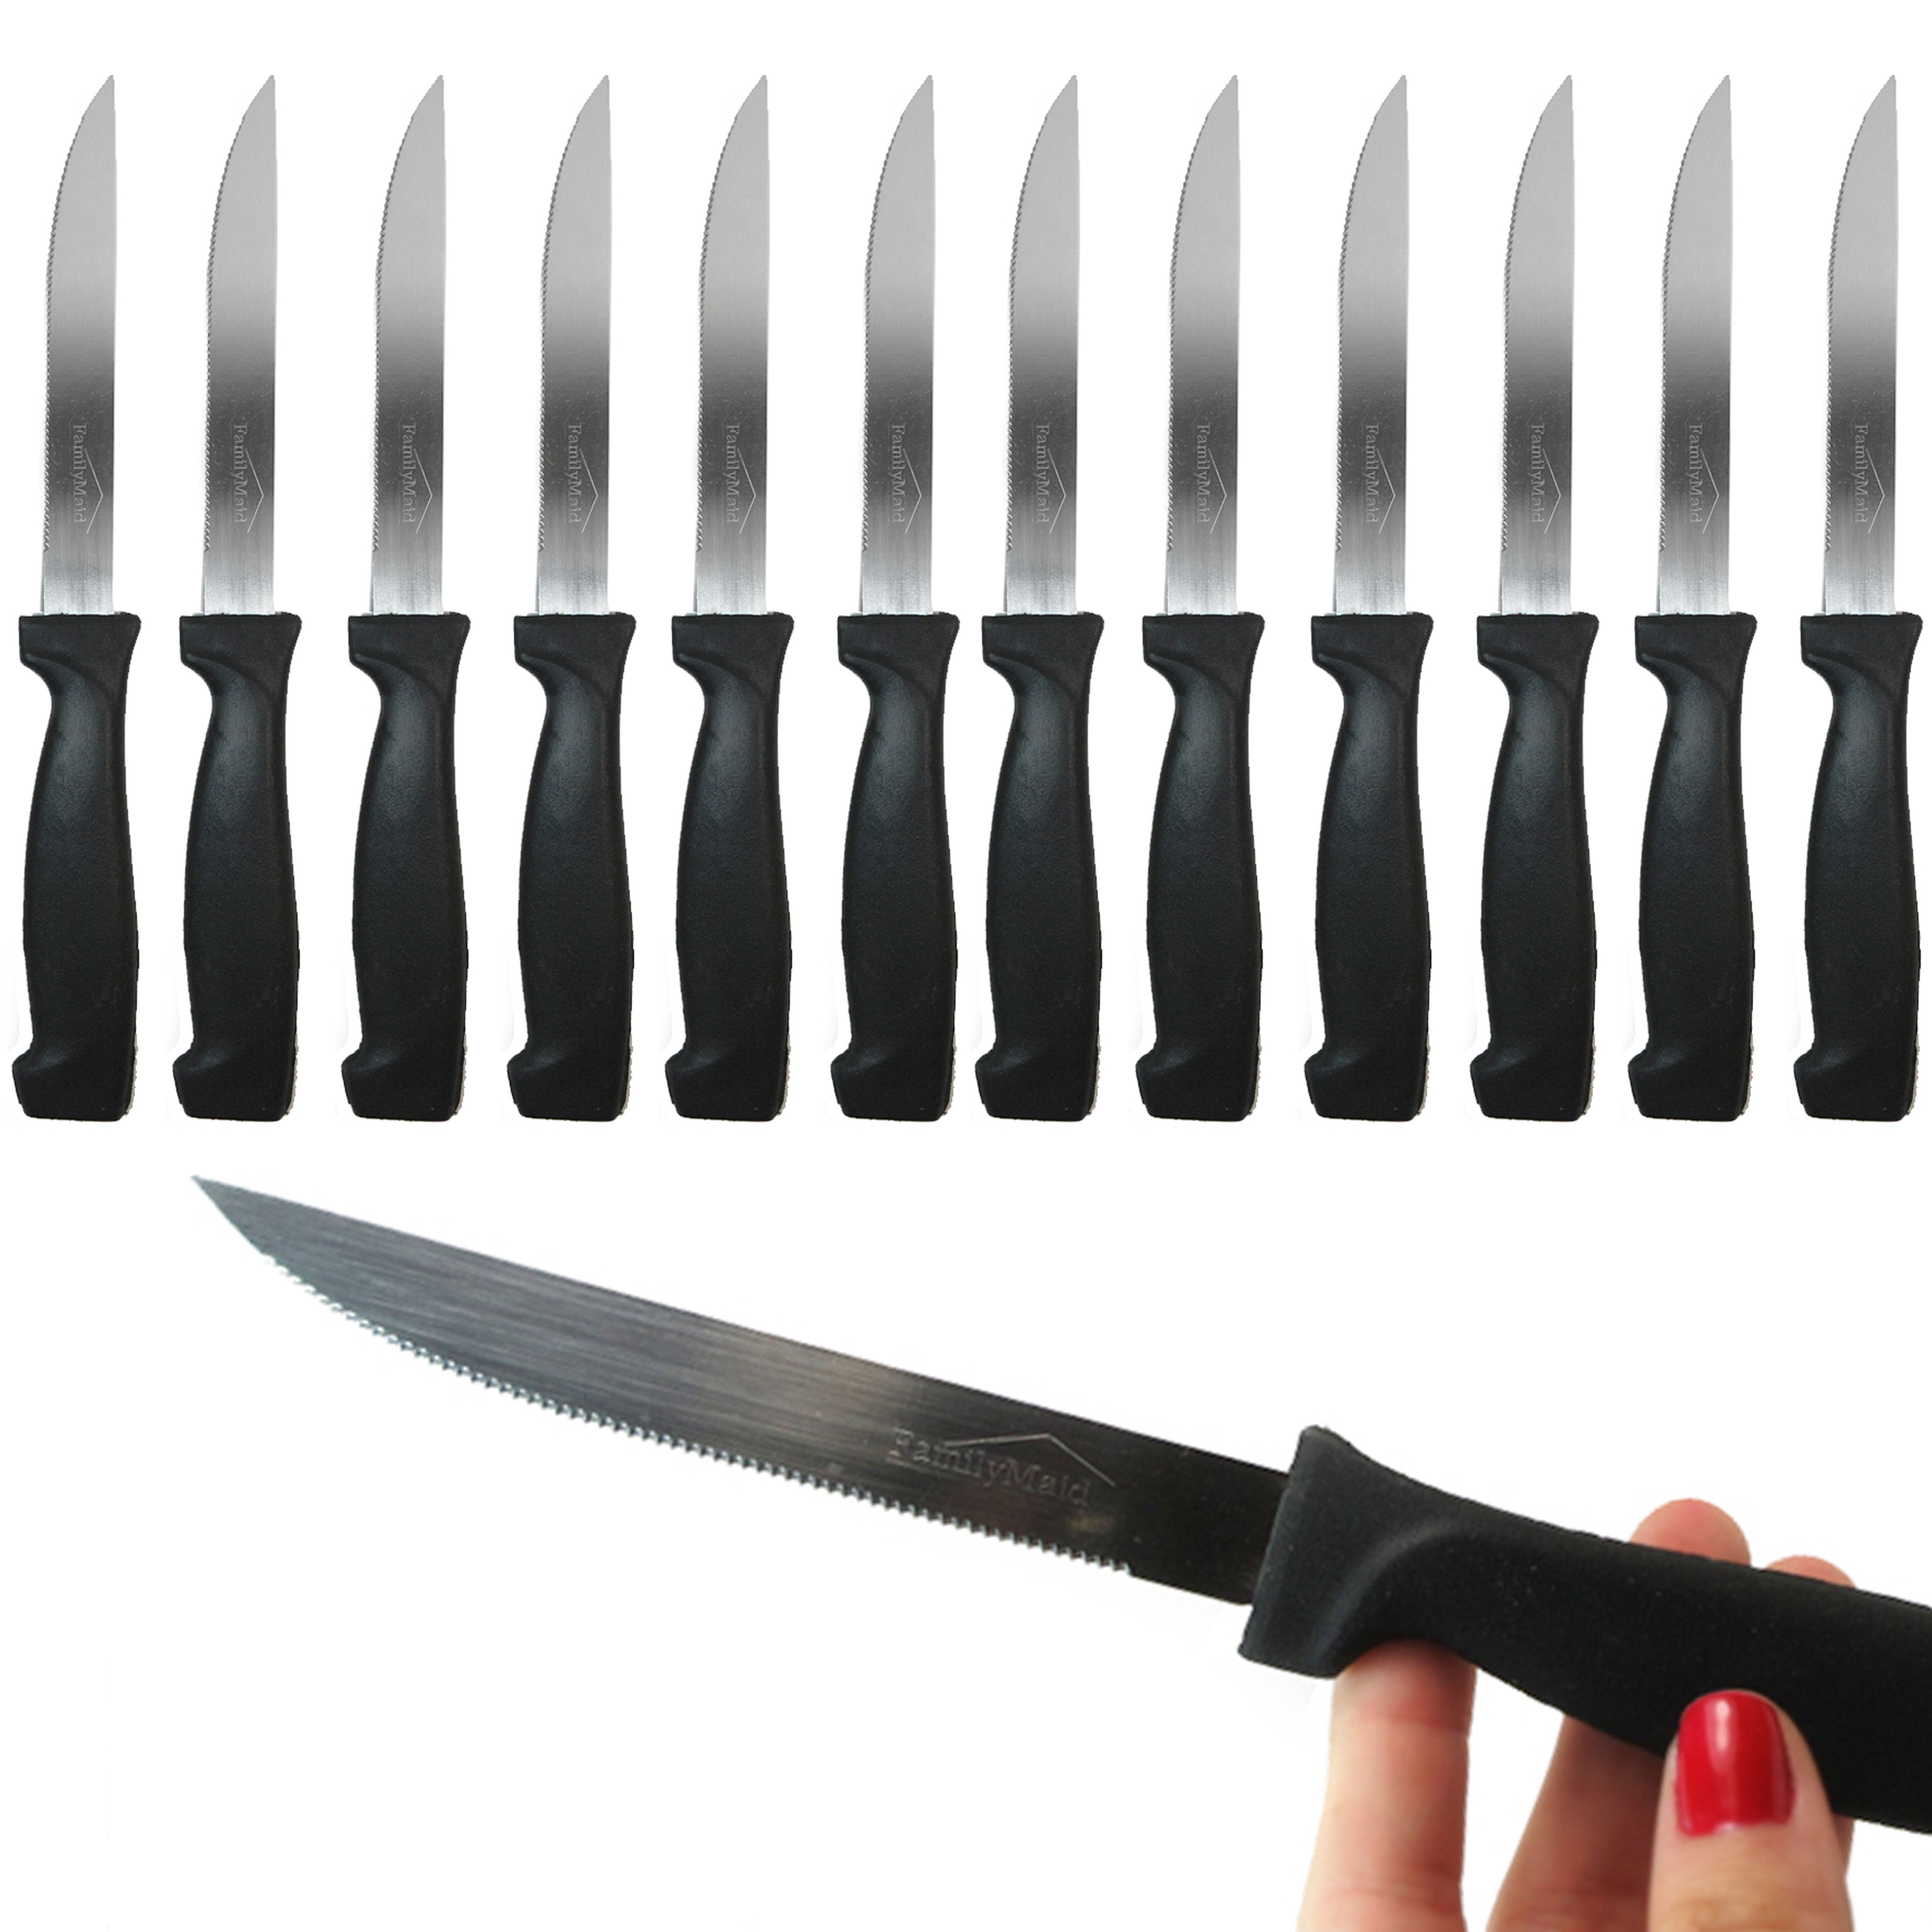  Xingjiake 12-piece Gold Steak Knives, Steak Knives Set Of 12,  Stainless Steak Knives, Serrated Butter Knife, Dinner Knives Set,  dishwasher safe: Home & Kitchen